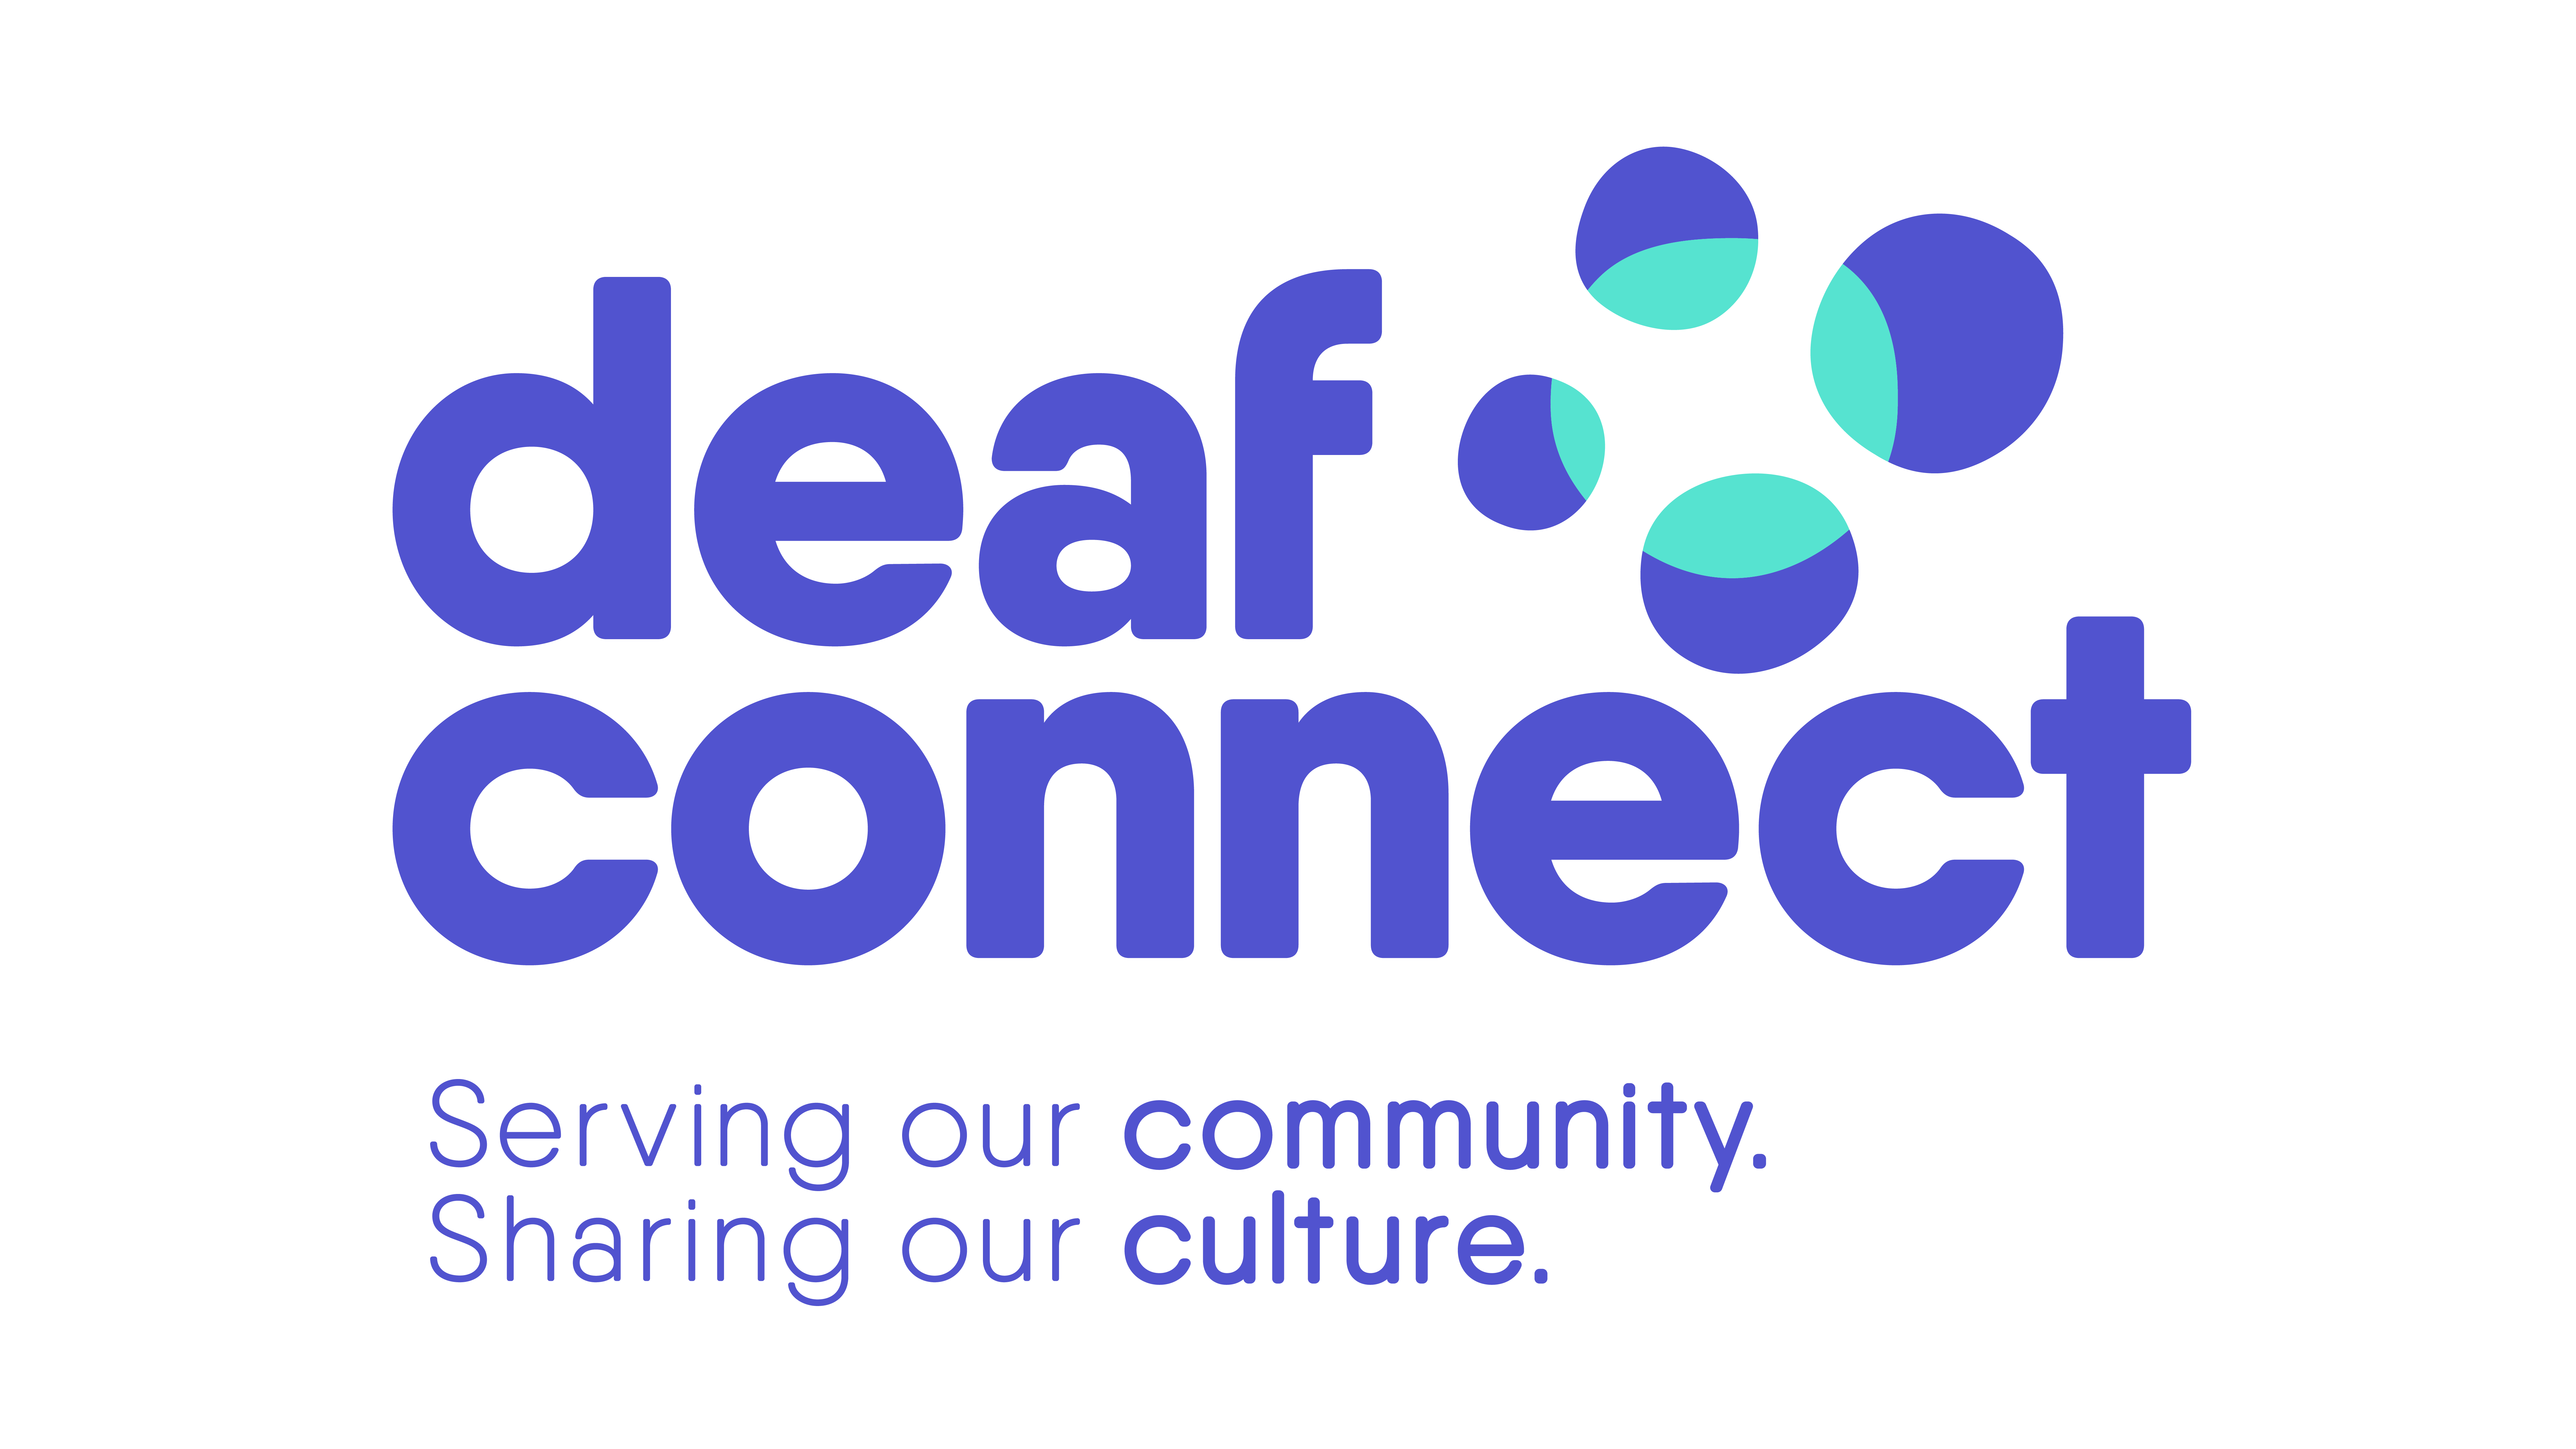 Deaf_Connect_RGB_Logo_Positive